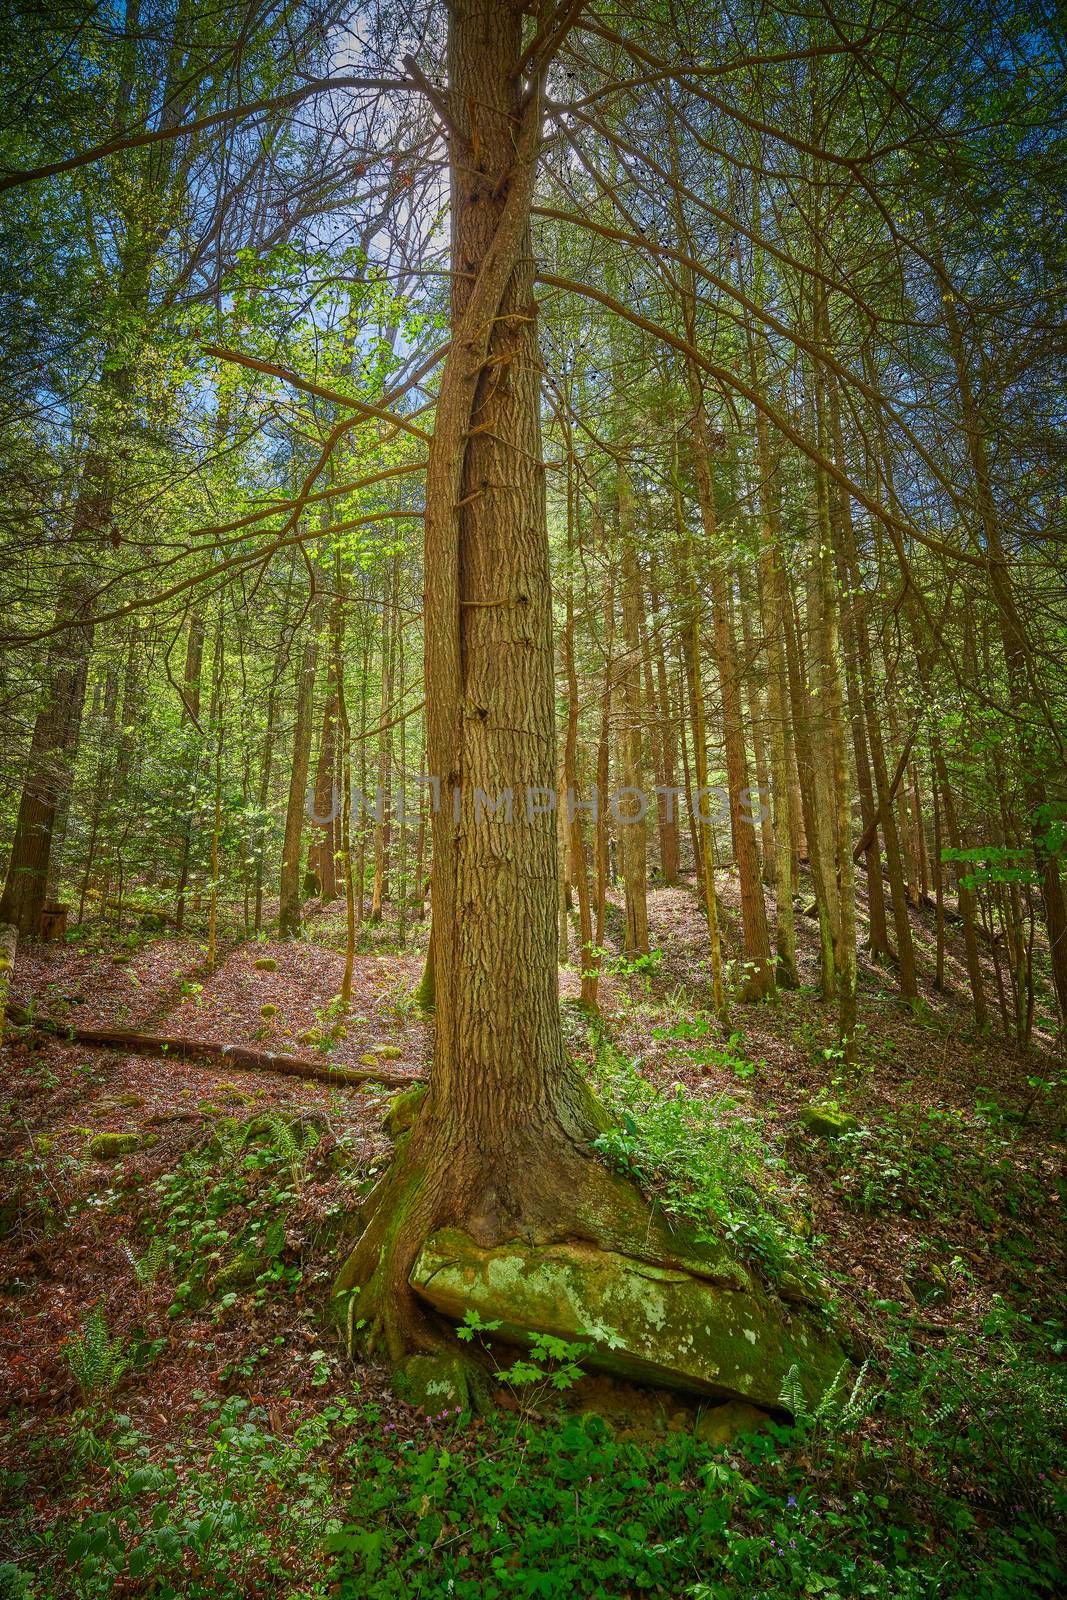 Hemlock tree growing around large sandstone boulder on forest lfloor.